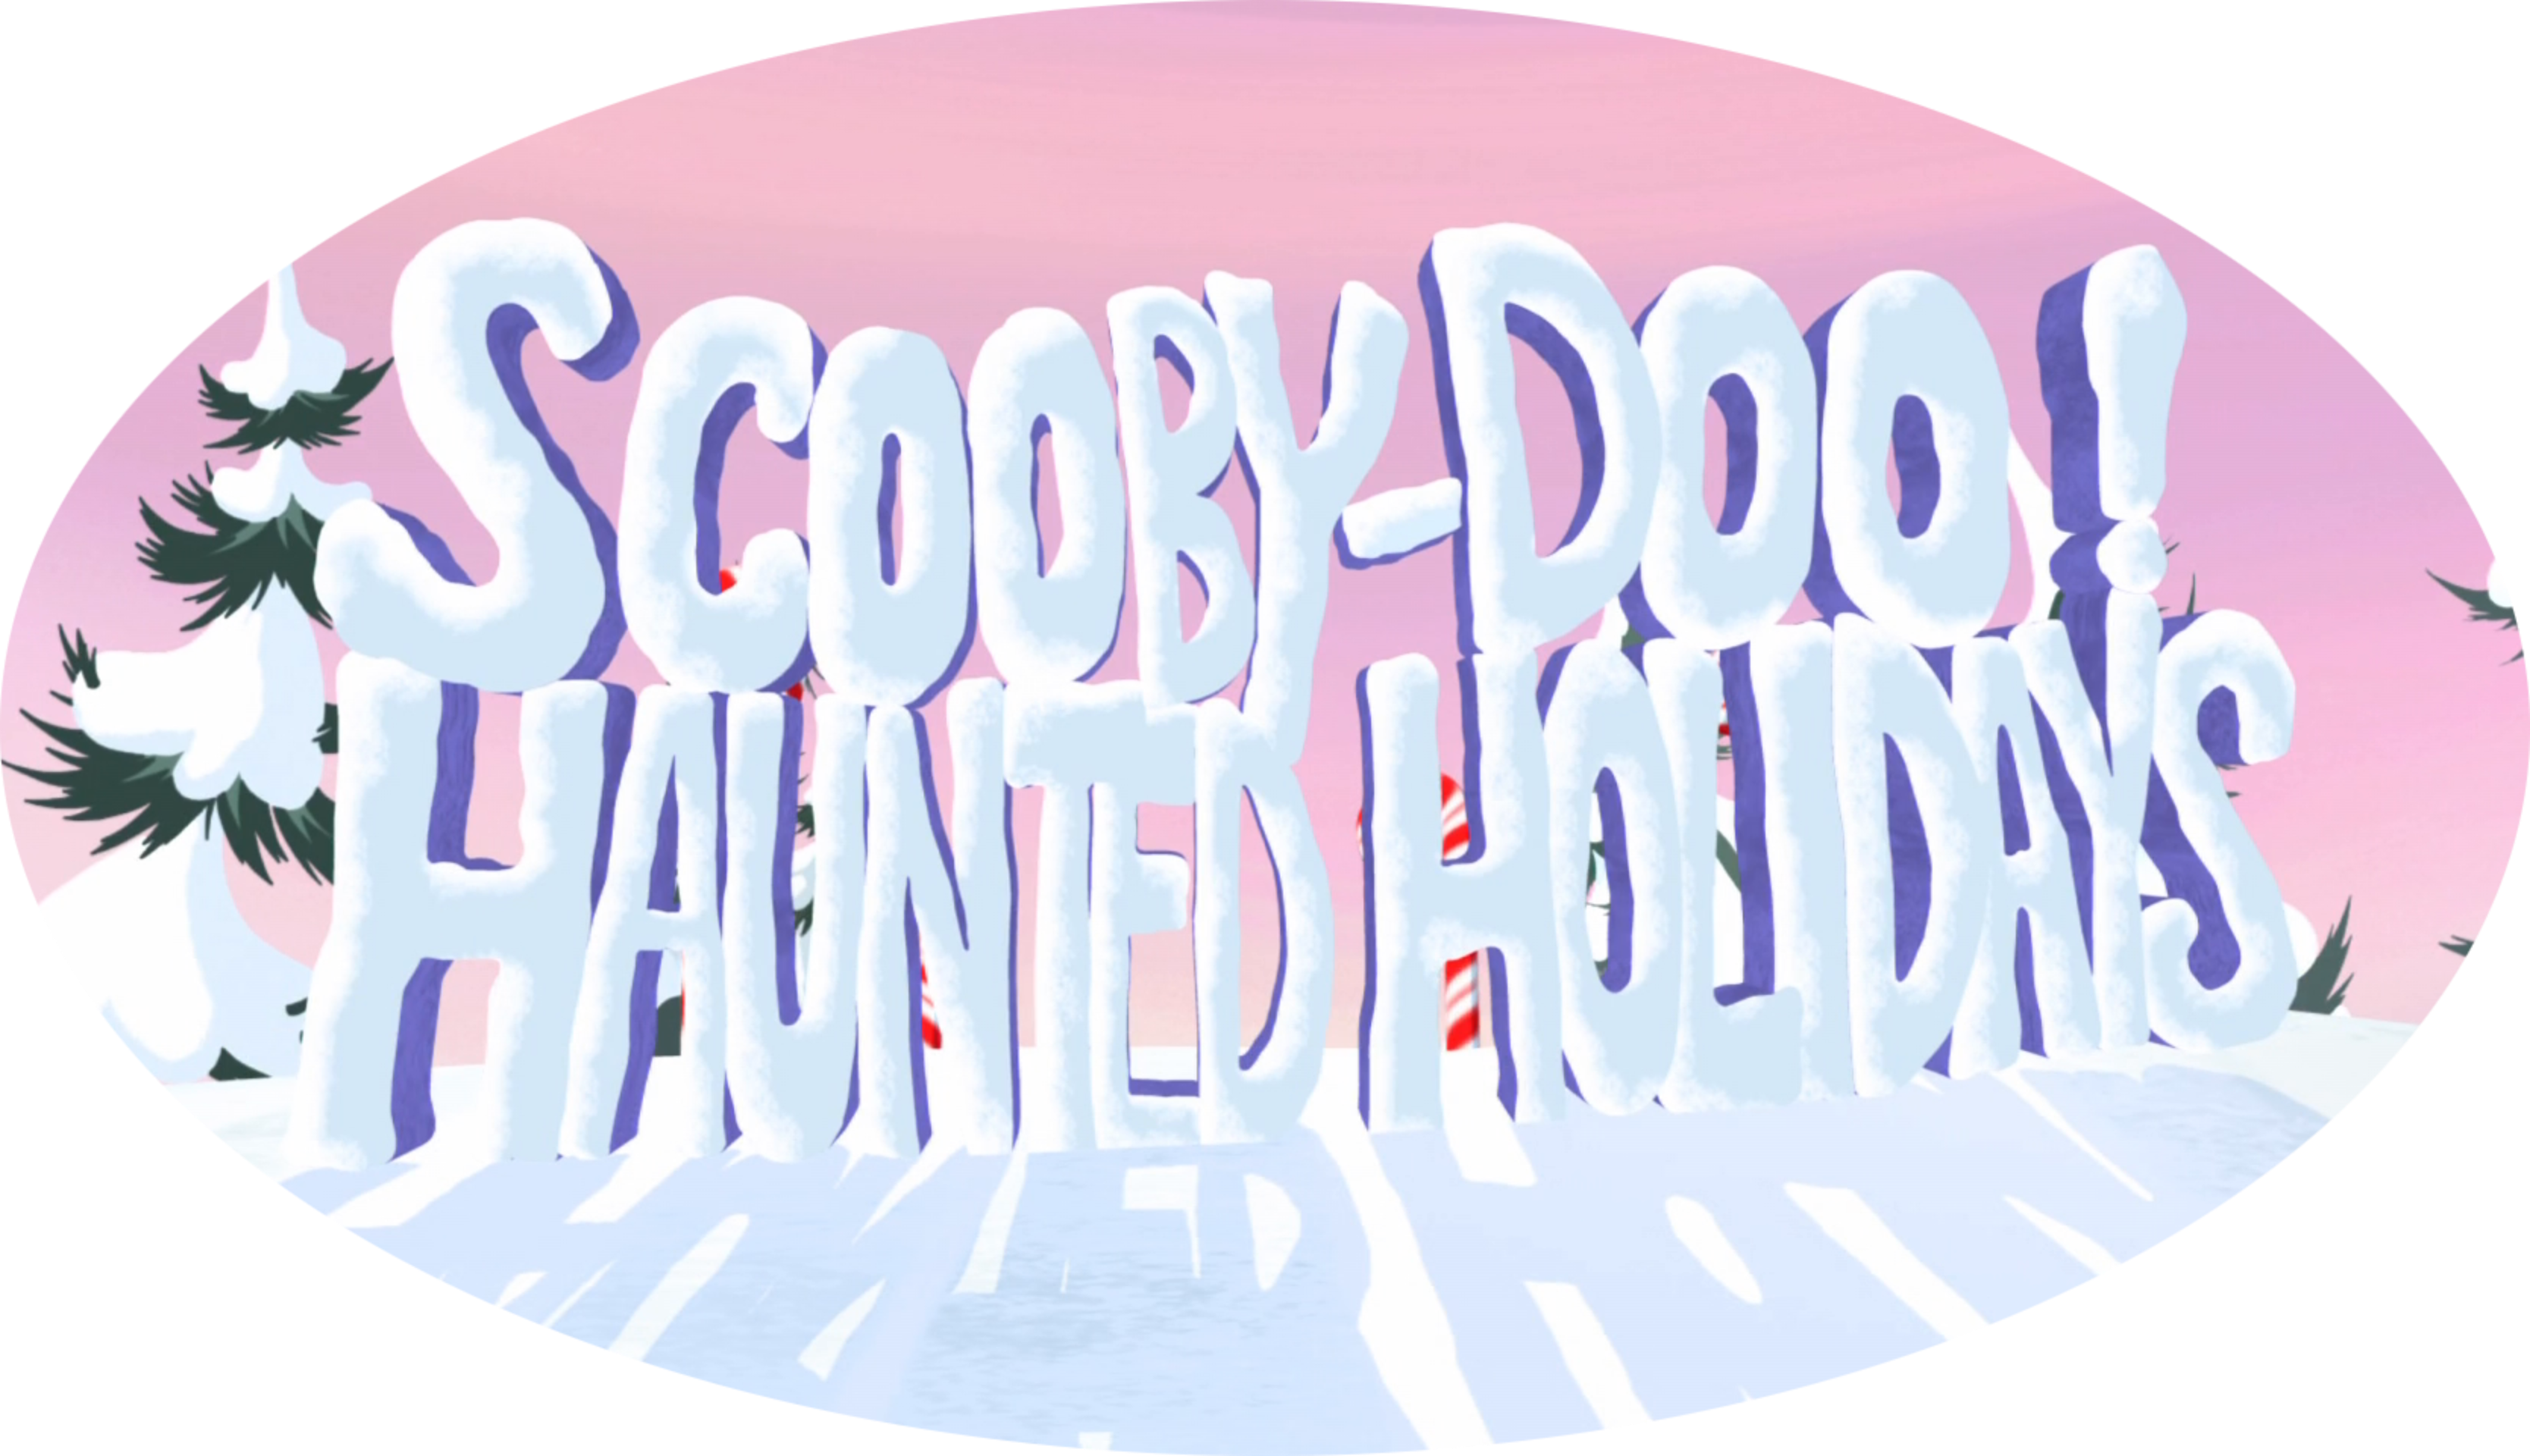 Scooby-Doo! Haunted Holidays (1 DVD Box Set)